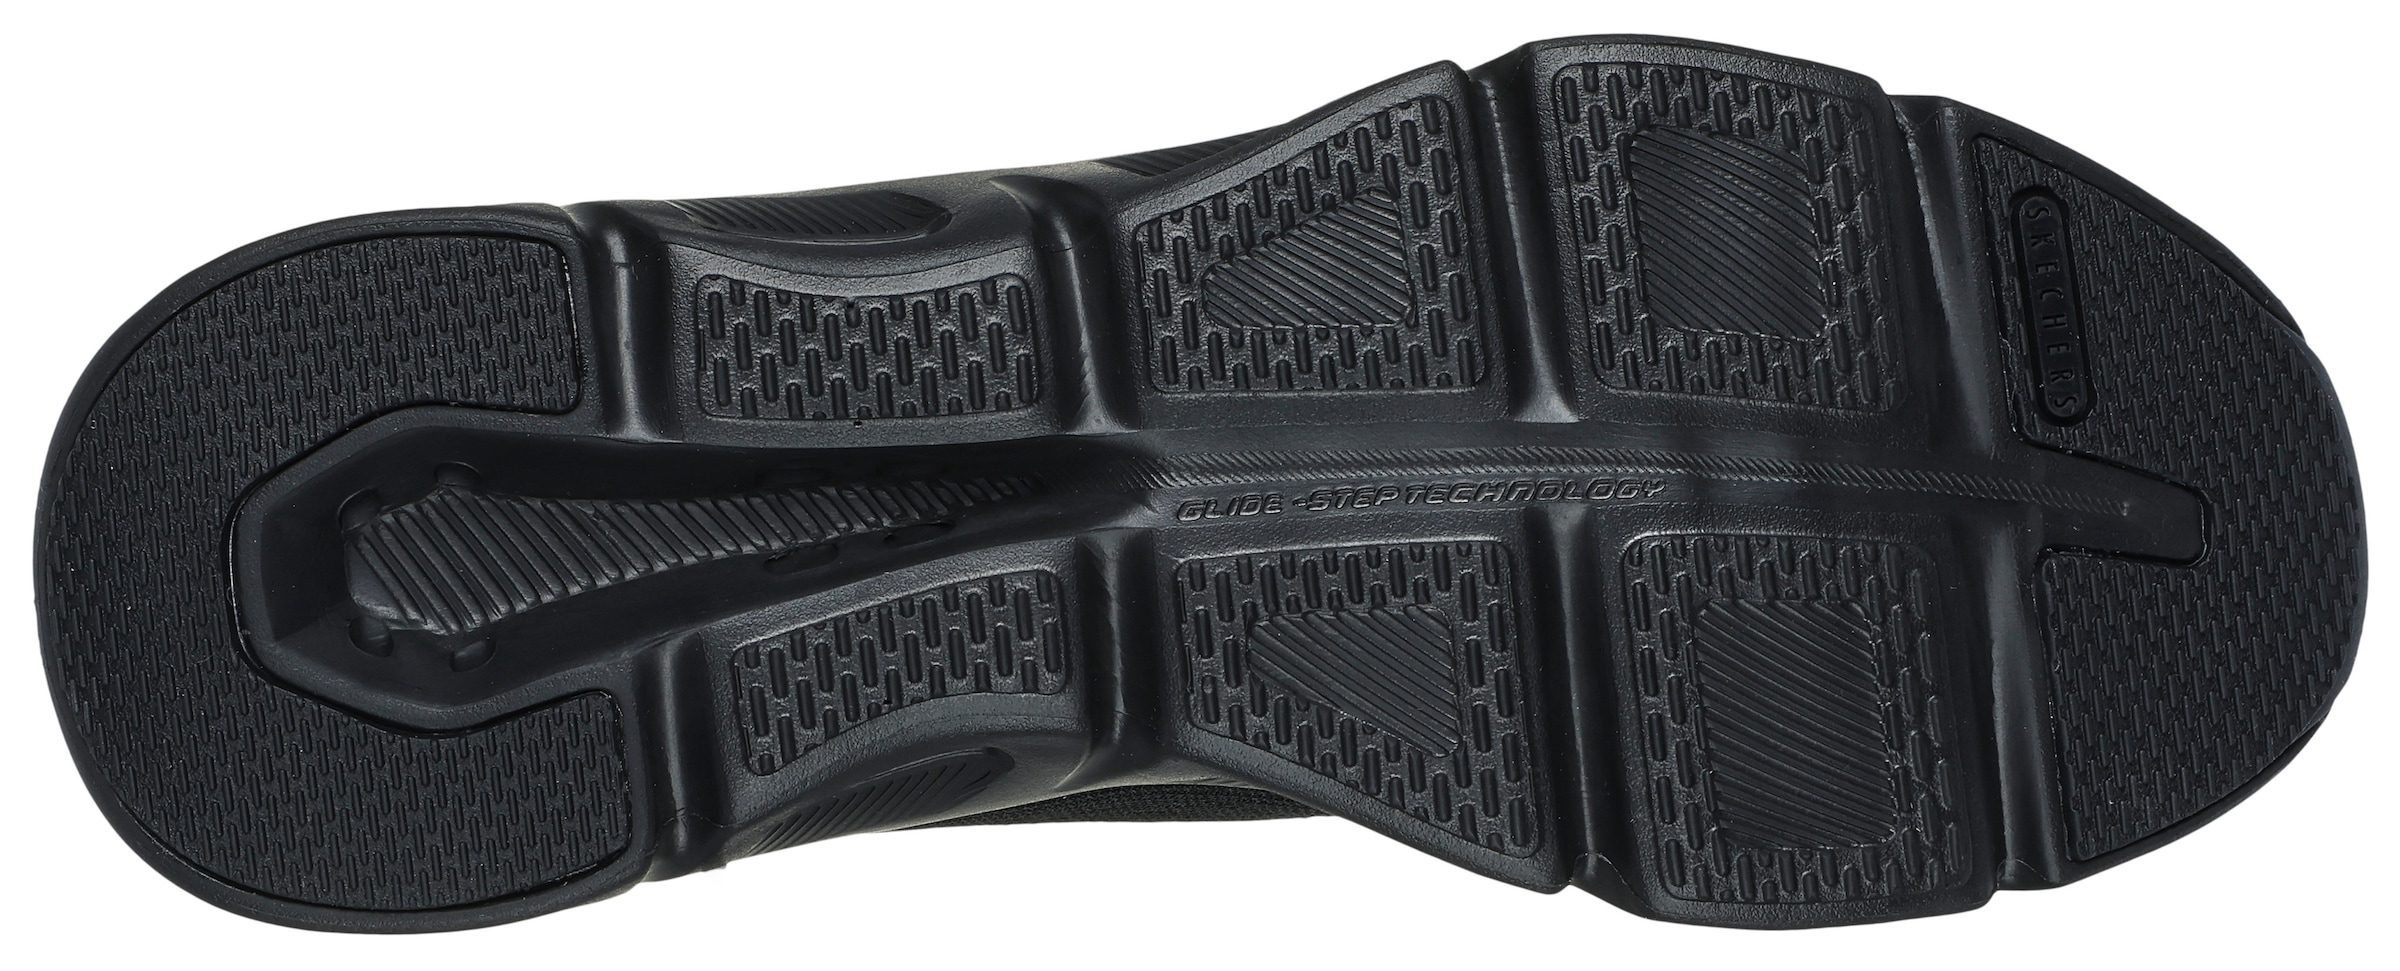 Skechers Slip-On Sneaker »GLIDE-STEP GRATIFY-RENOWN«, Trainingsschuh, Freizeitschuh mit Air-Cooled Memory Foam